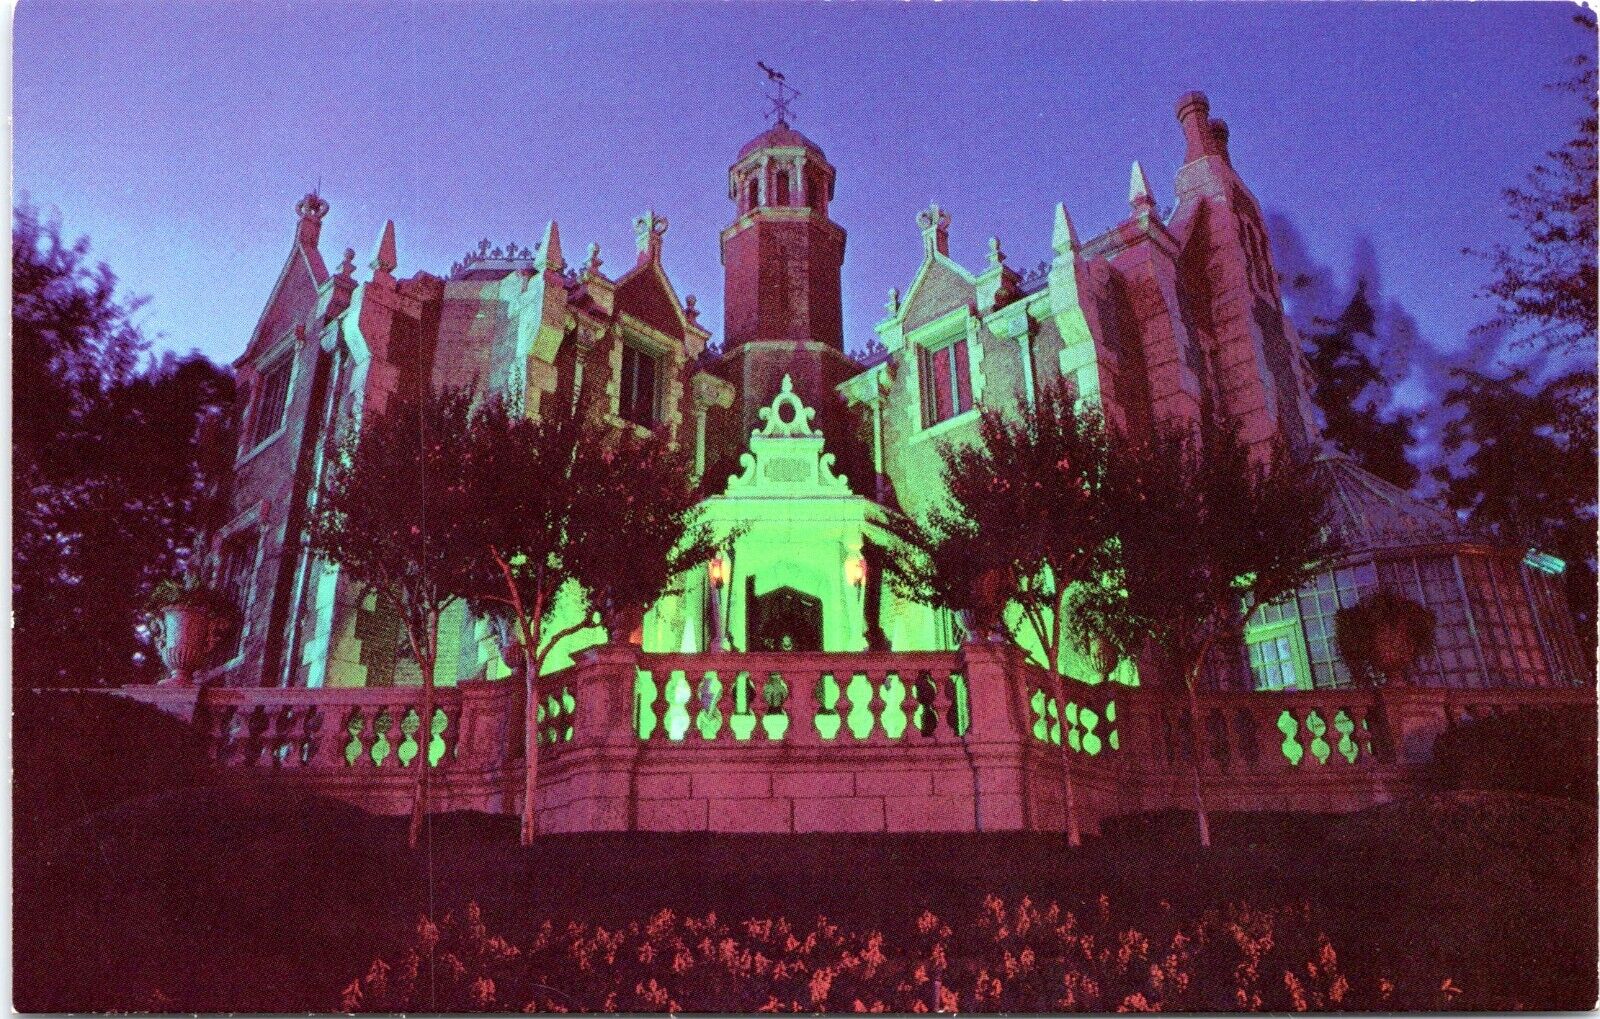 Haunted Mansion at night, Disney World, Florida - Vintage Chrome Postcard